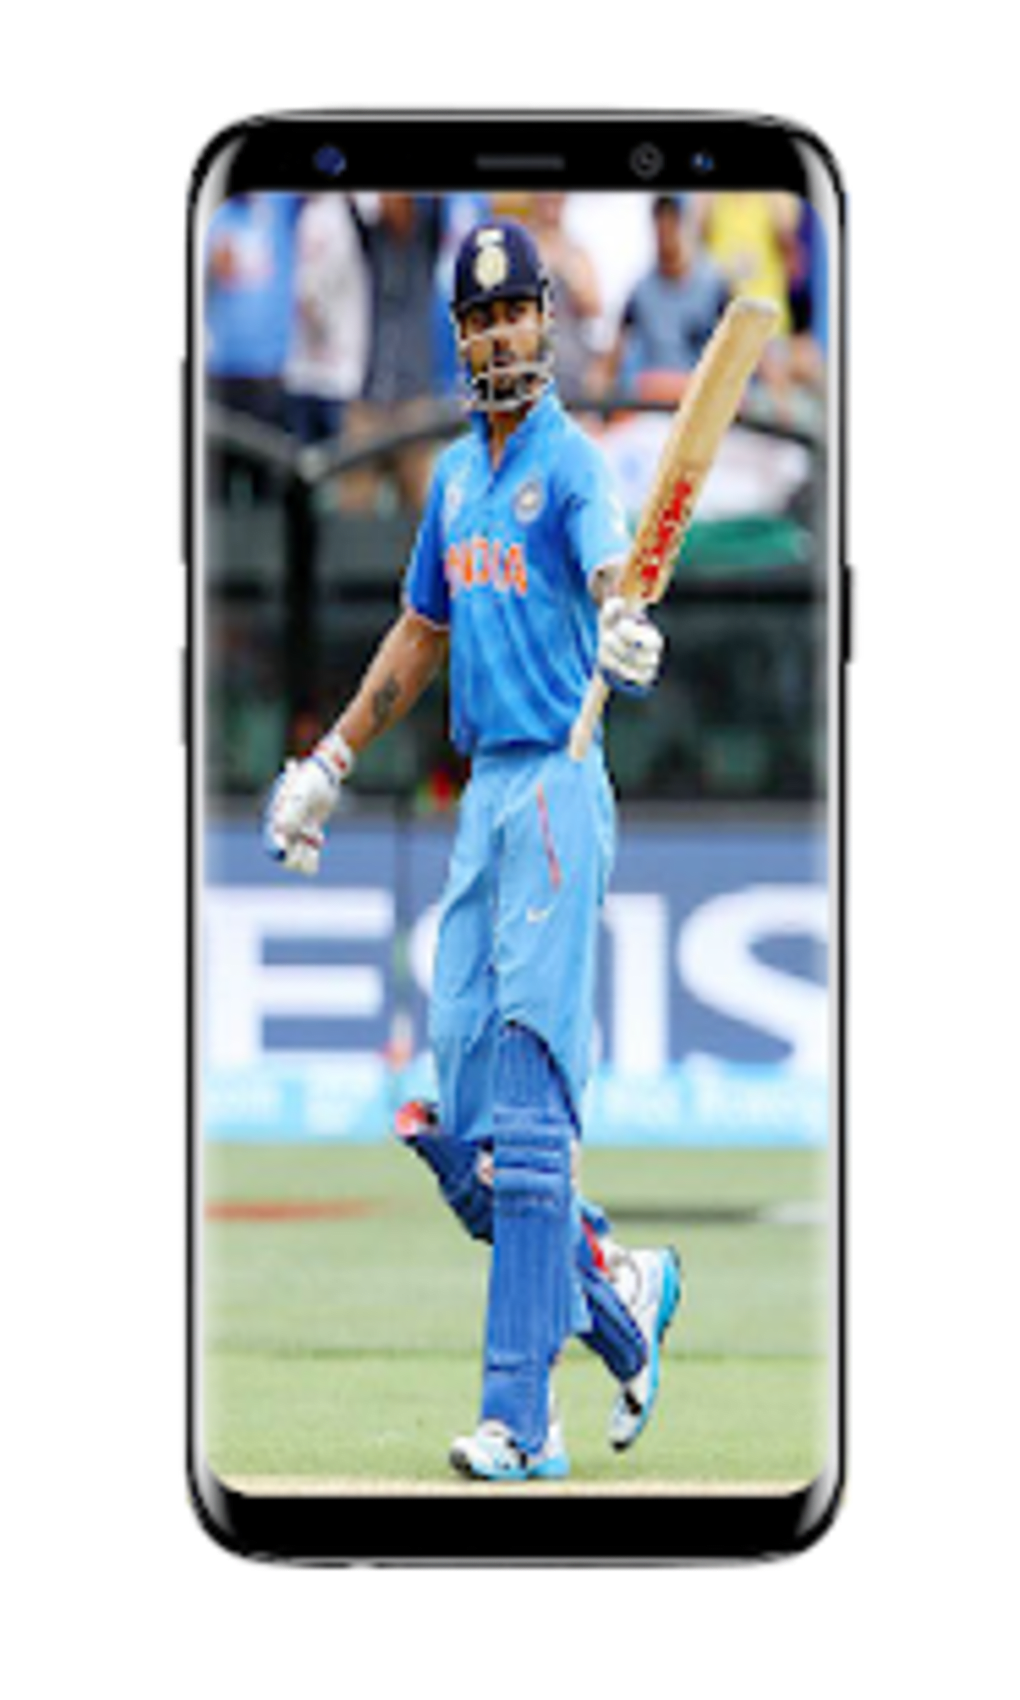 star cricket mobile tv